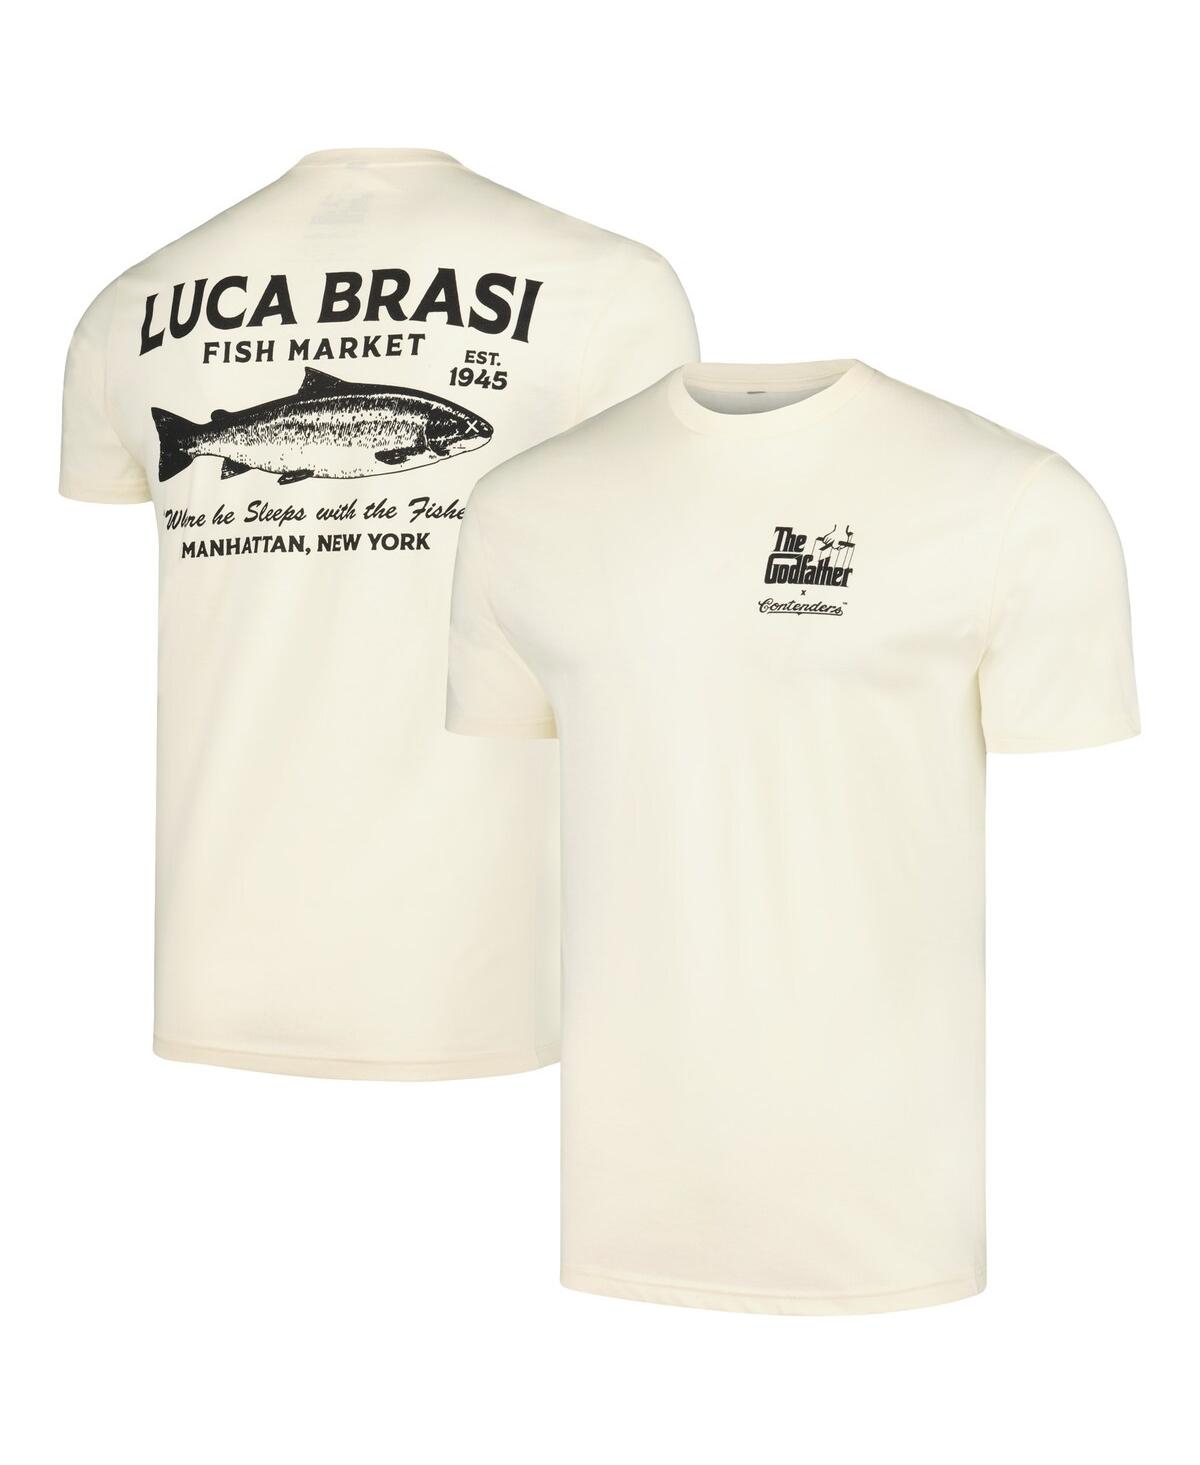 Men's Contenders Clothing Natural The Godfather Luca Brasi Fish Market T-shirt - Natural